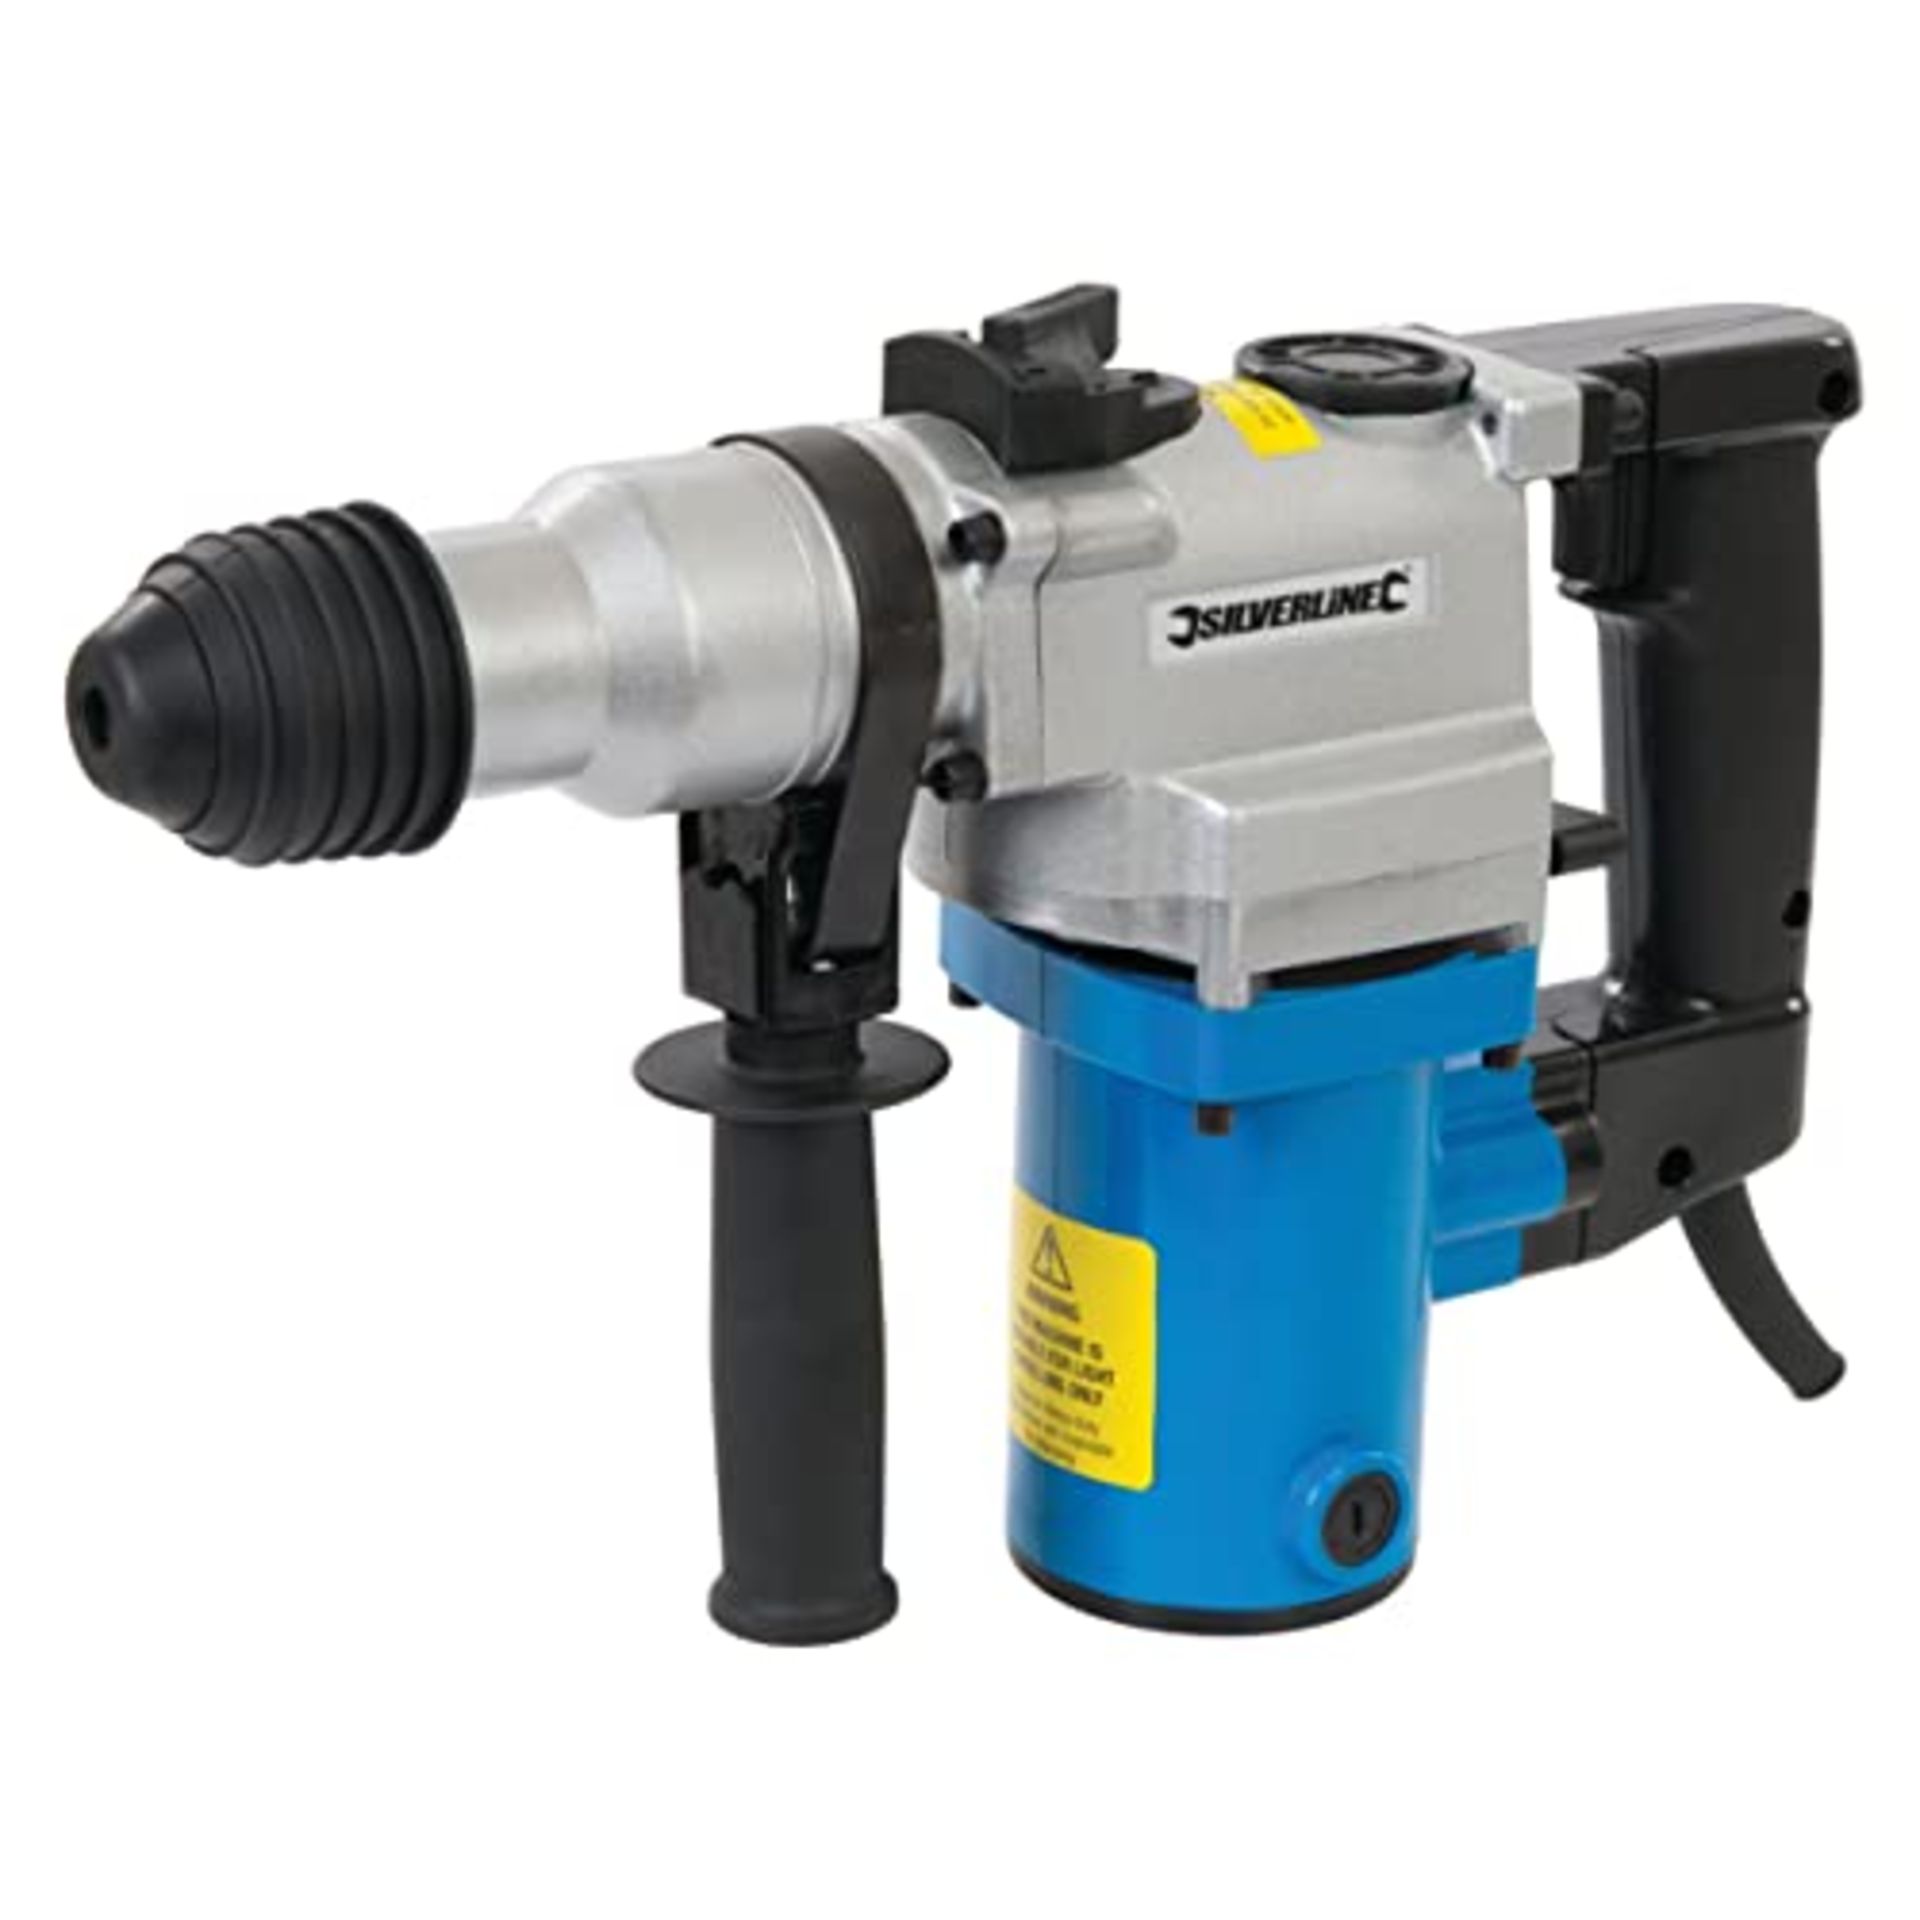 RRP £68.00 Silverline DIY 850W SDS Plus Hammer Drill (633821)